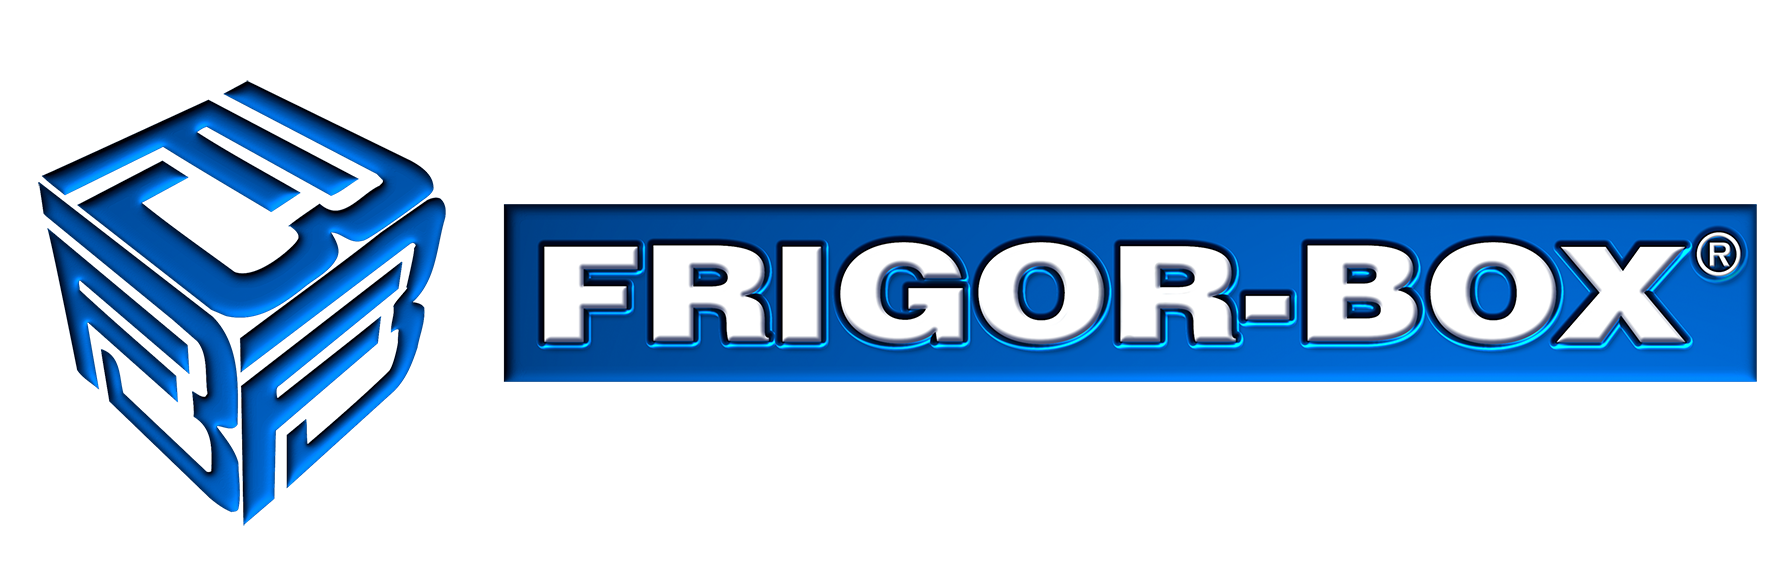 Frigorbox International Srl - Celle frigorifere industriai e commerciali